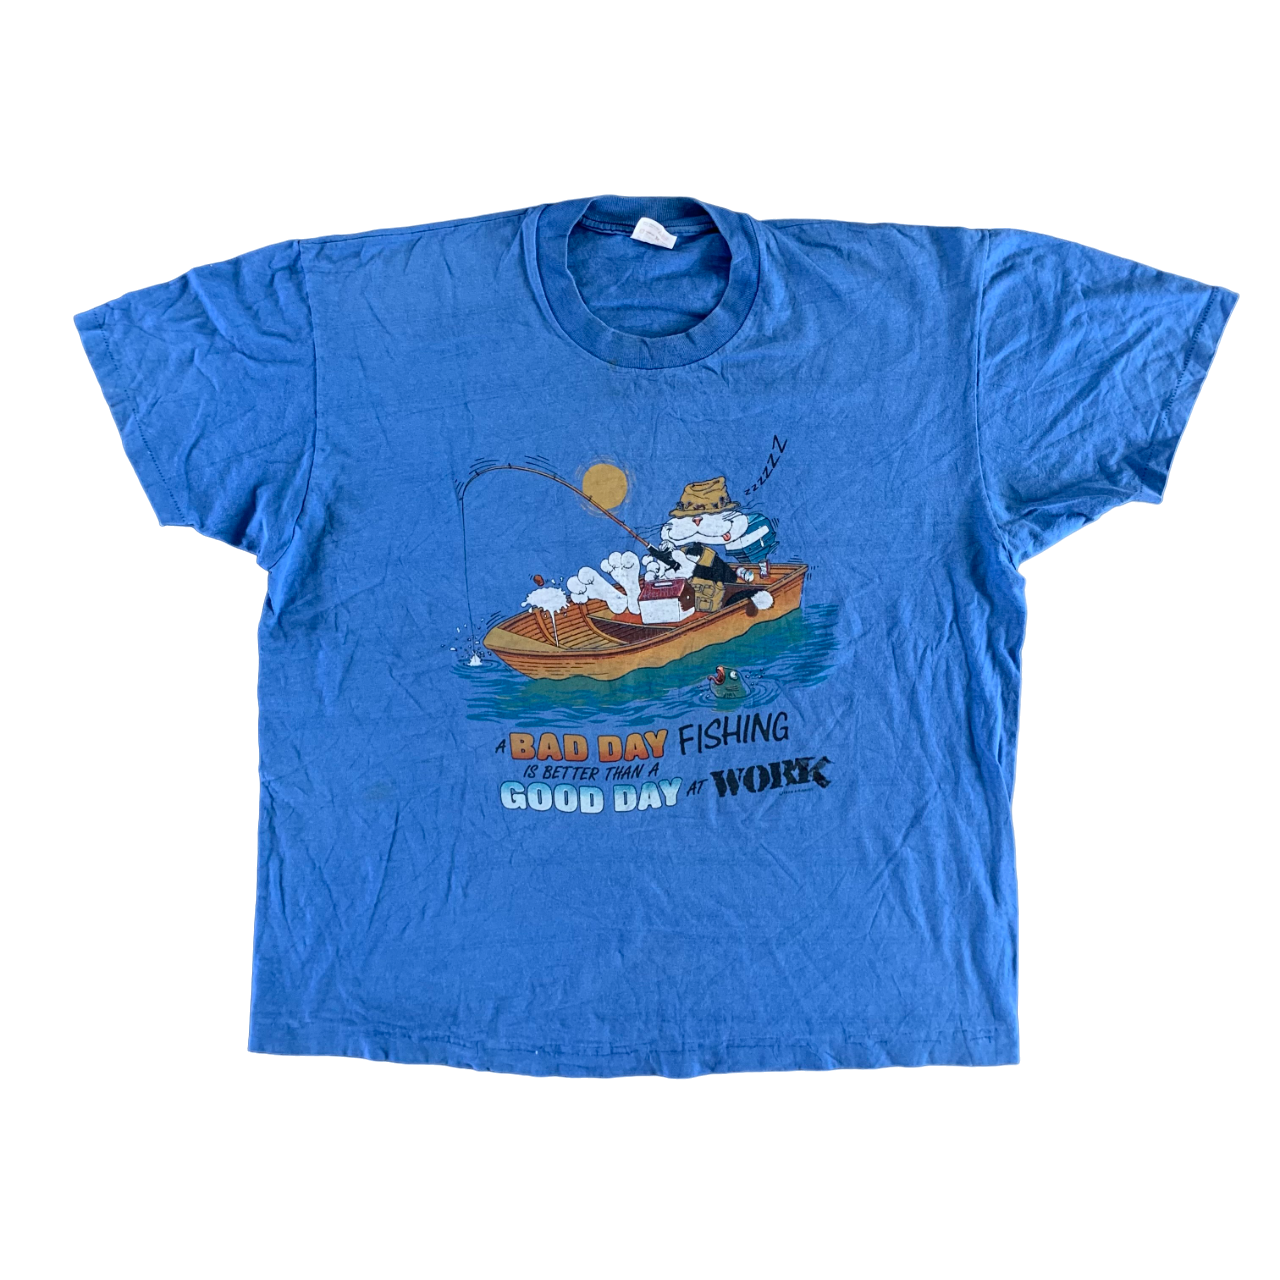 Vintage 1988 Fishing T-shirt size XXL